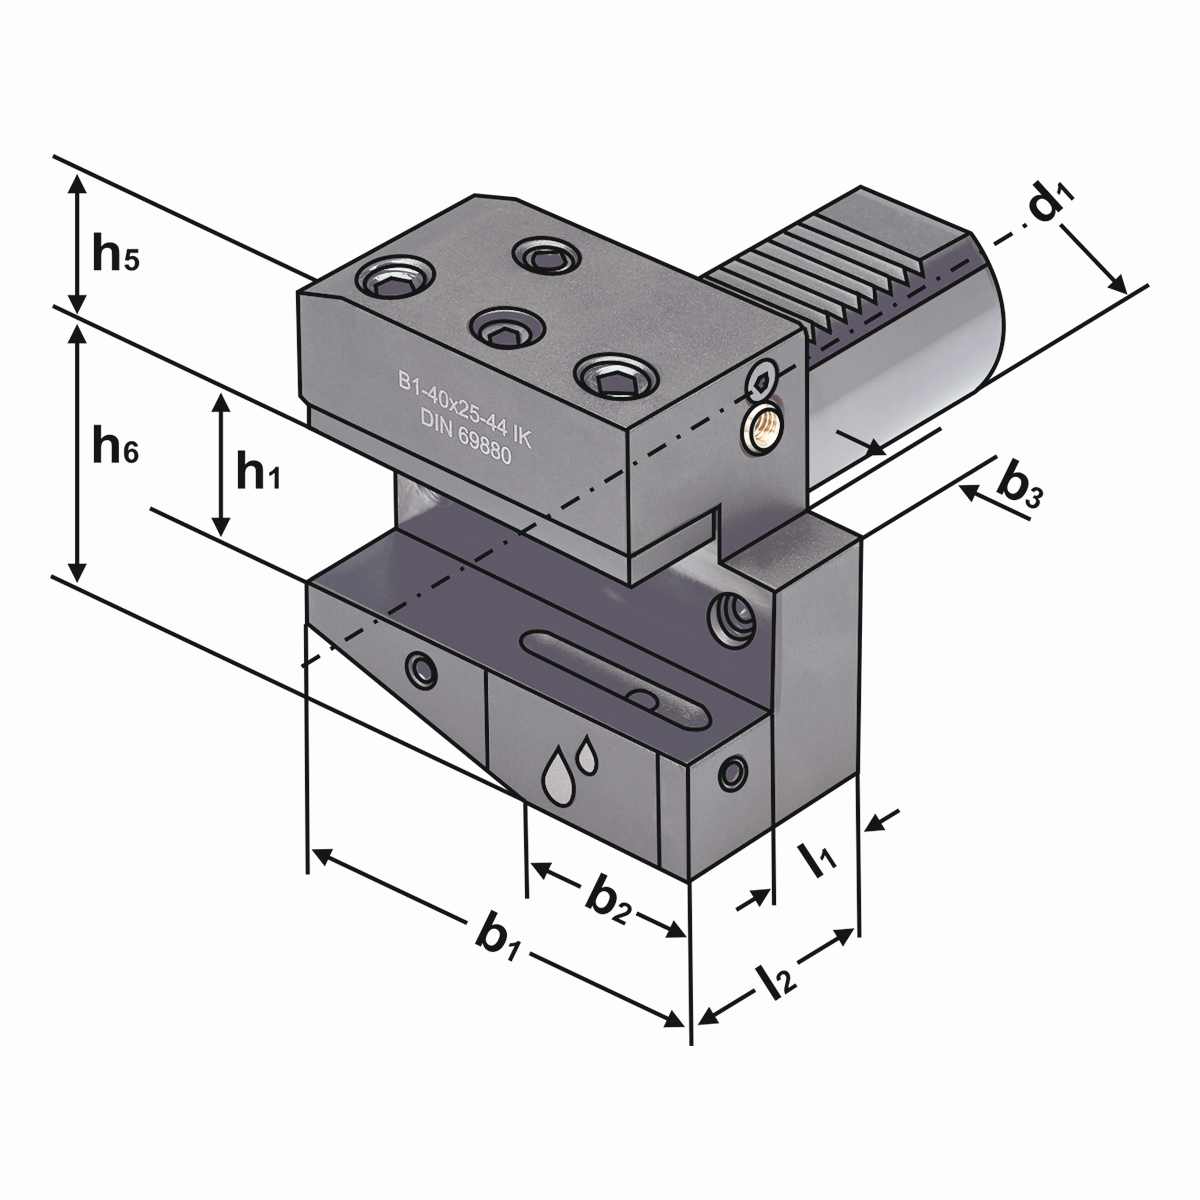 Radial-Werkzeughalter B1-40x25-44 DIN 69880 (ISO 10889)